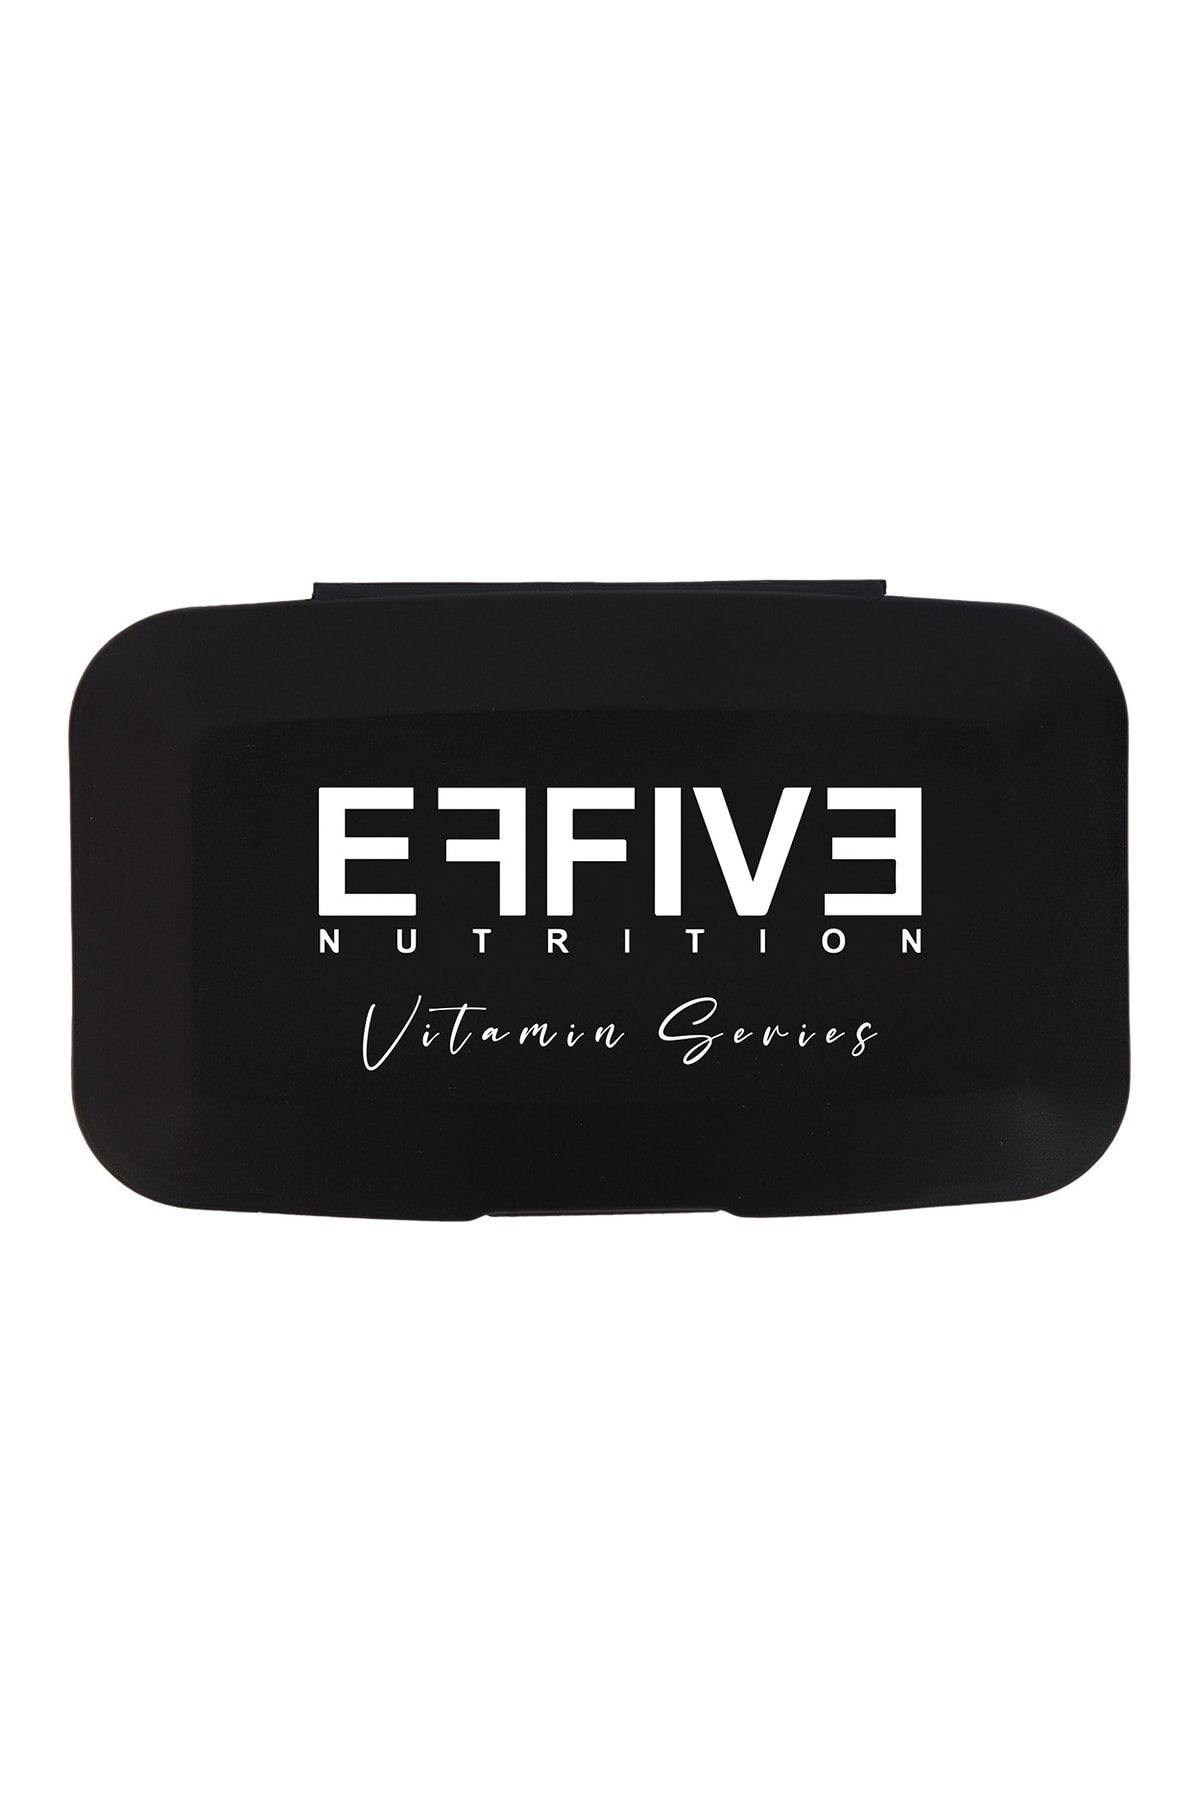 Effive Nutrition Black Pillbox (hap Saklama Kutusu)